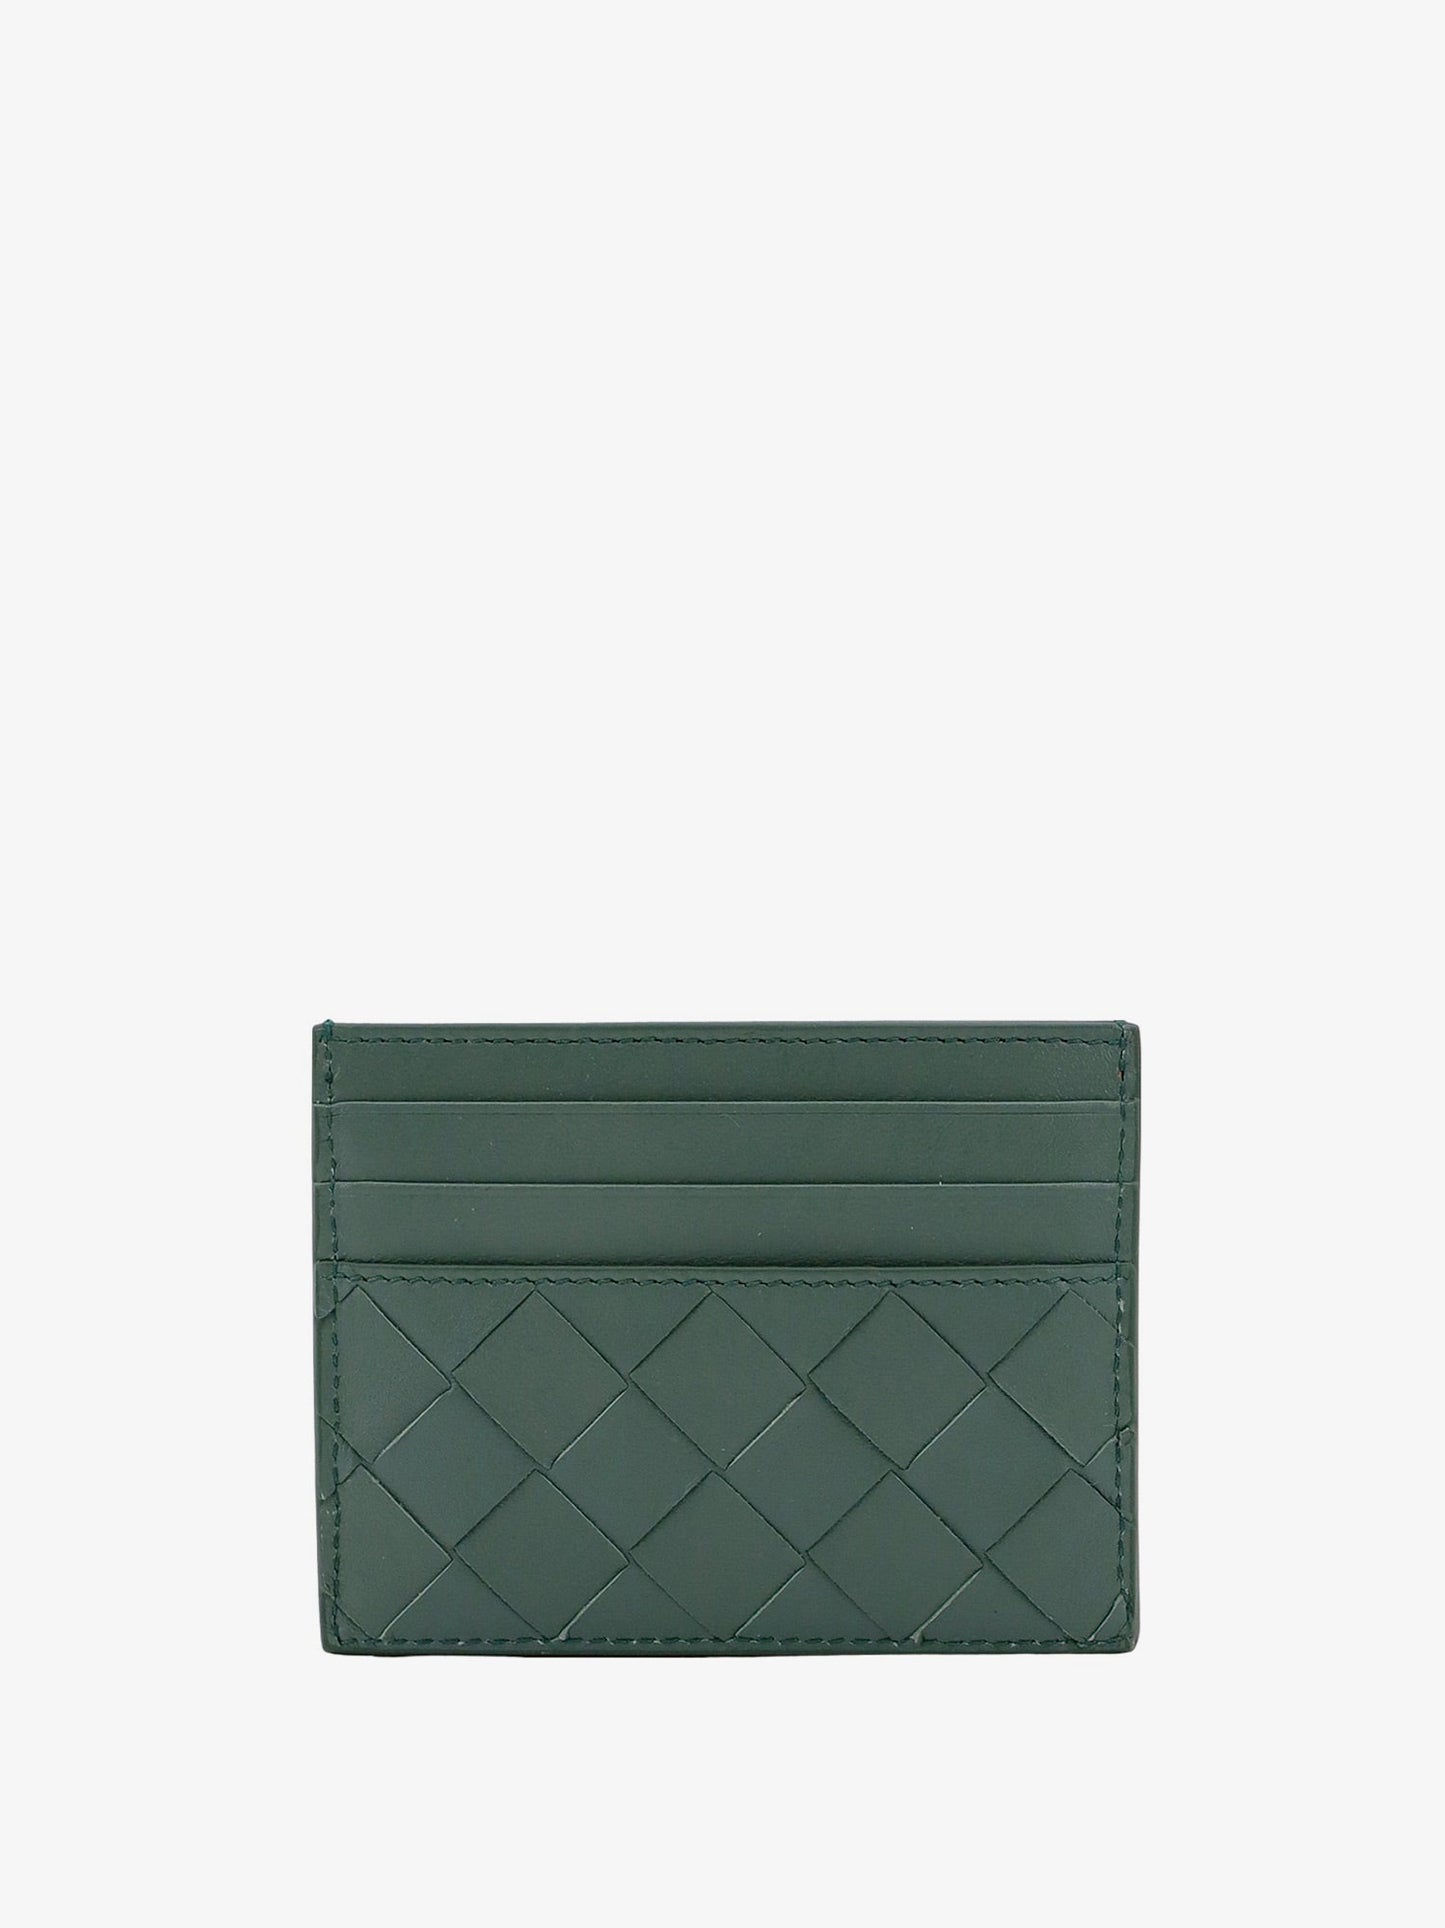 Bottega Veneta Woman Intrecciato Woman Green Wallets